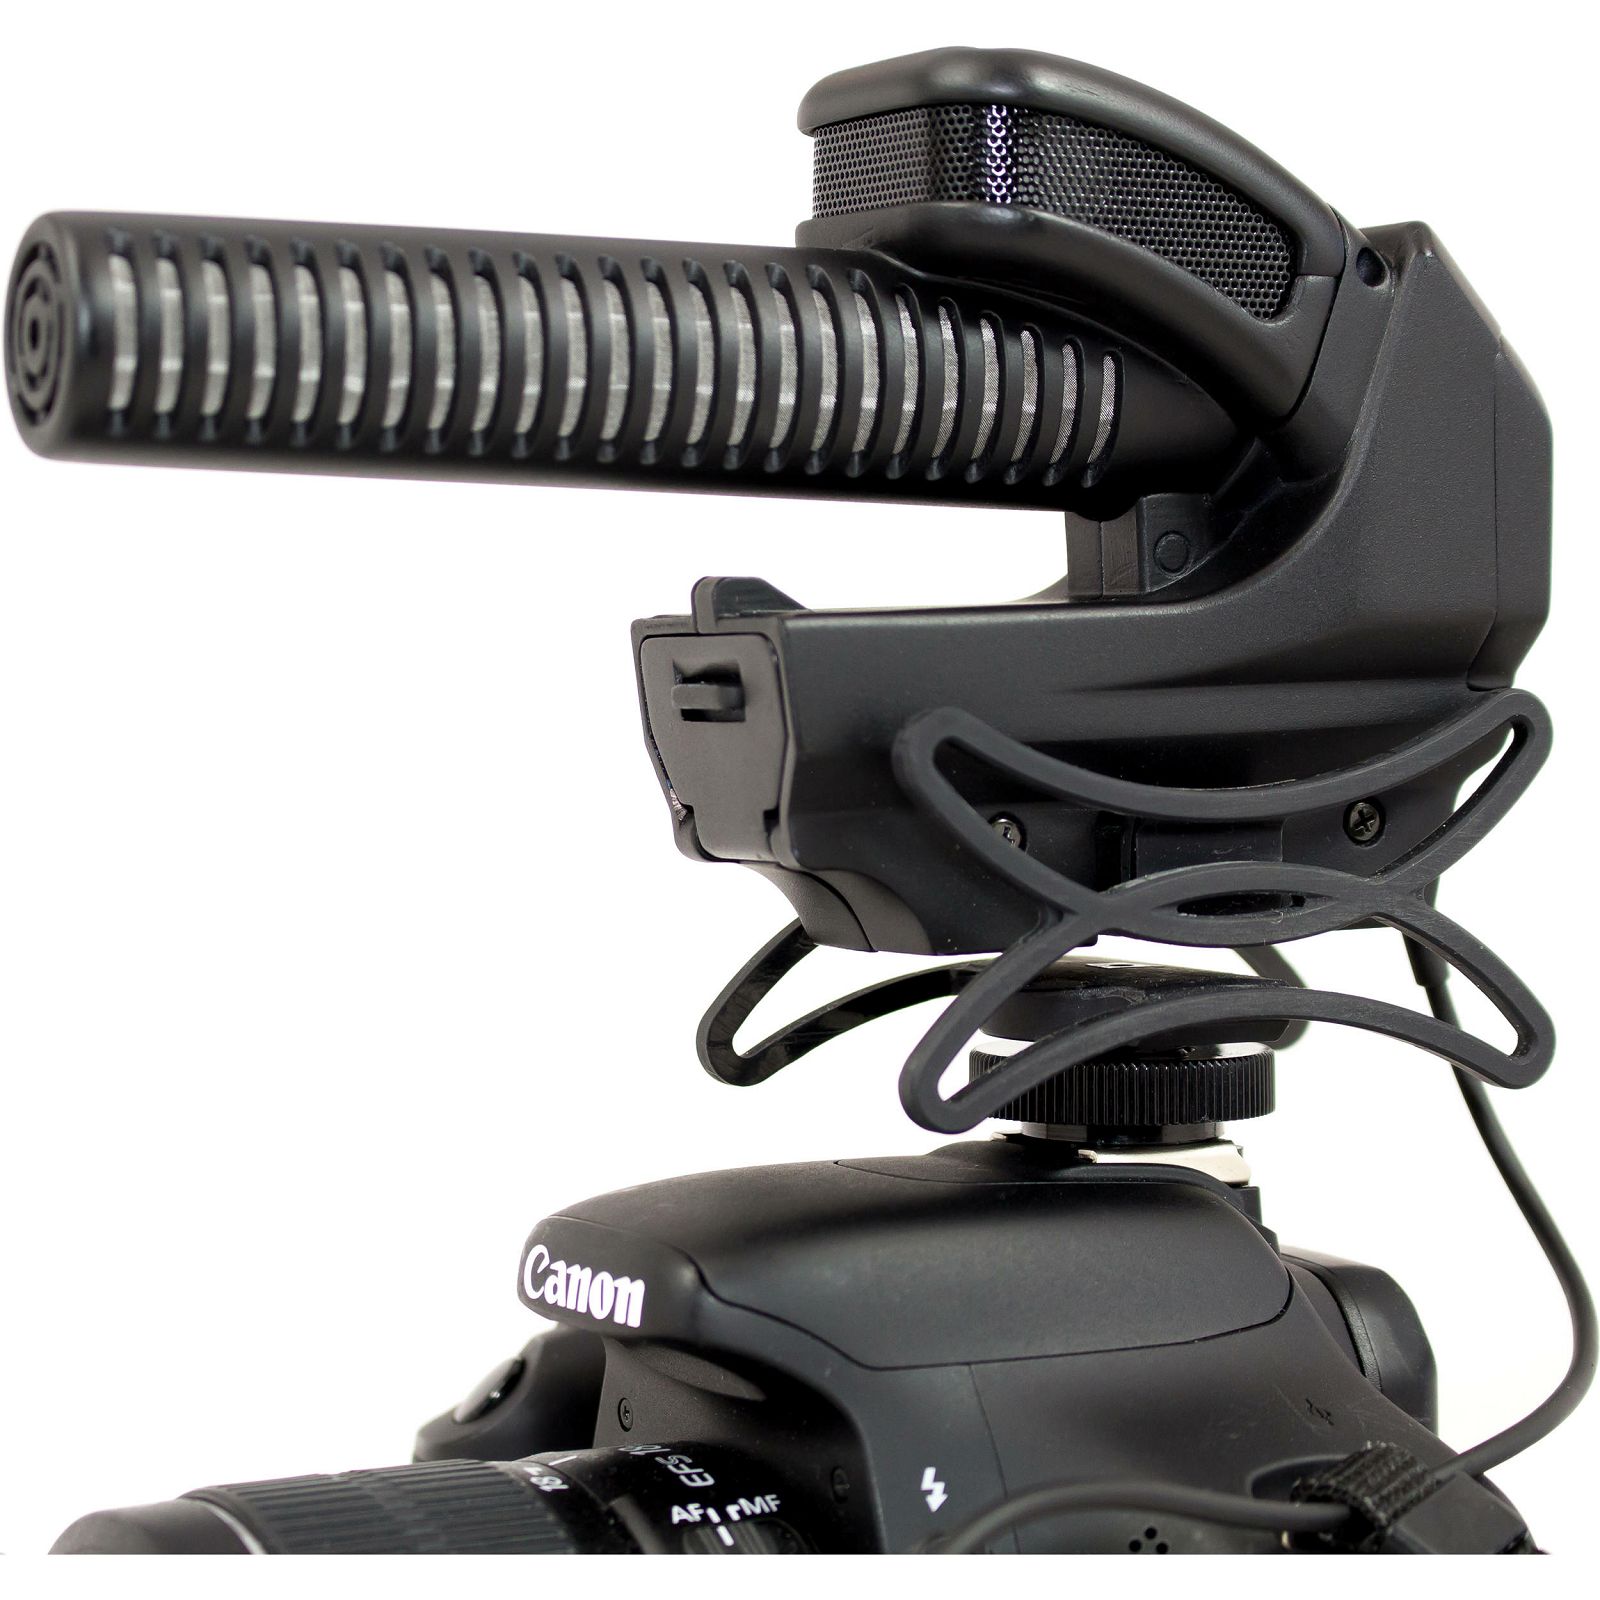 Azden SMX-30 Stereo-Mono-Switchable Video Microphone mikrofon za DSLR fotoaparat i kamere